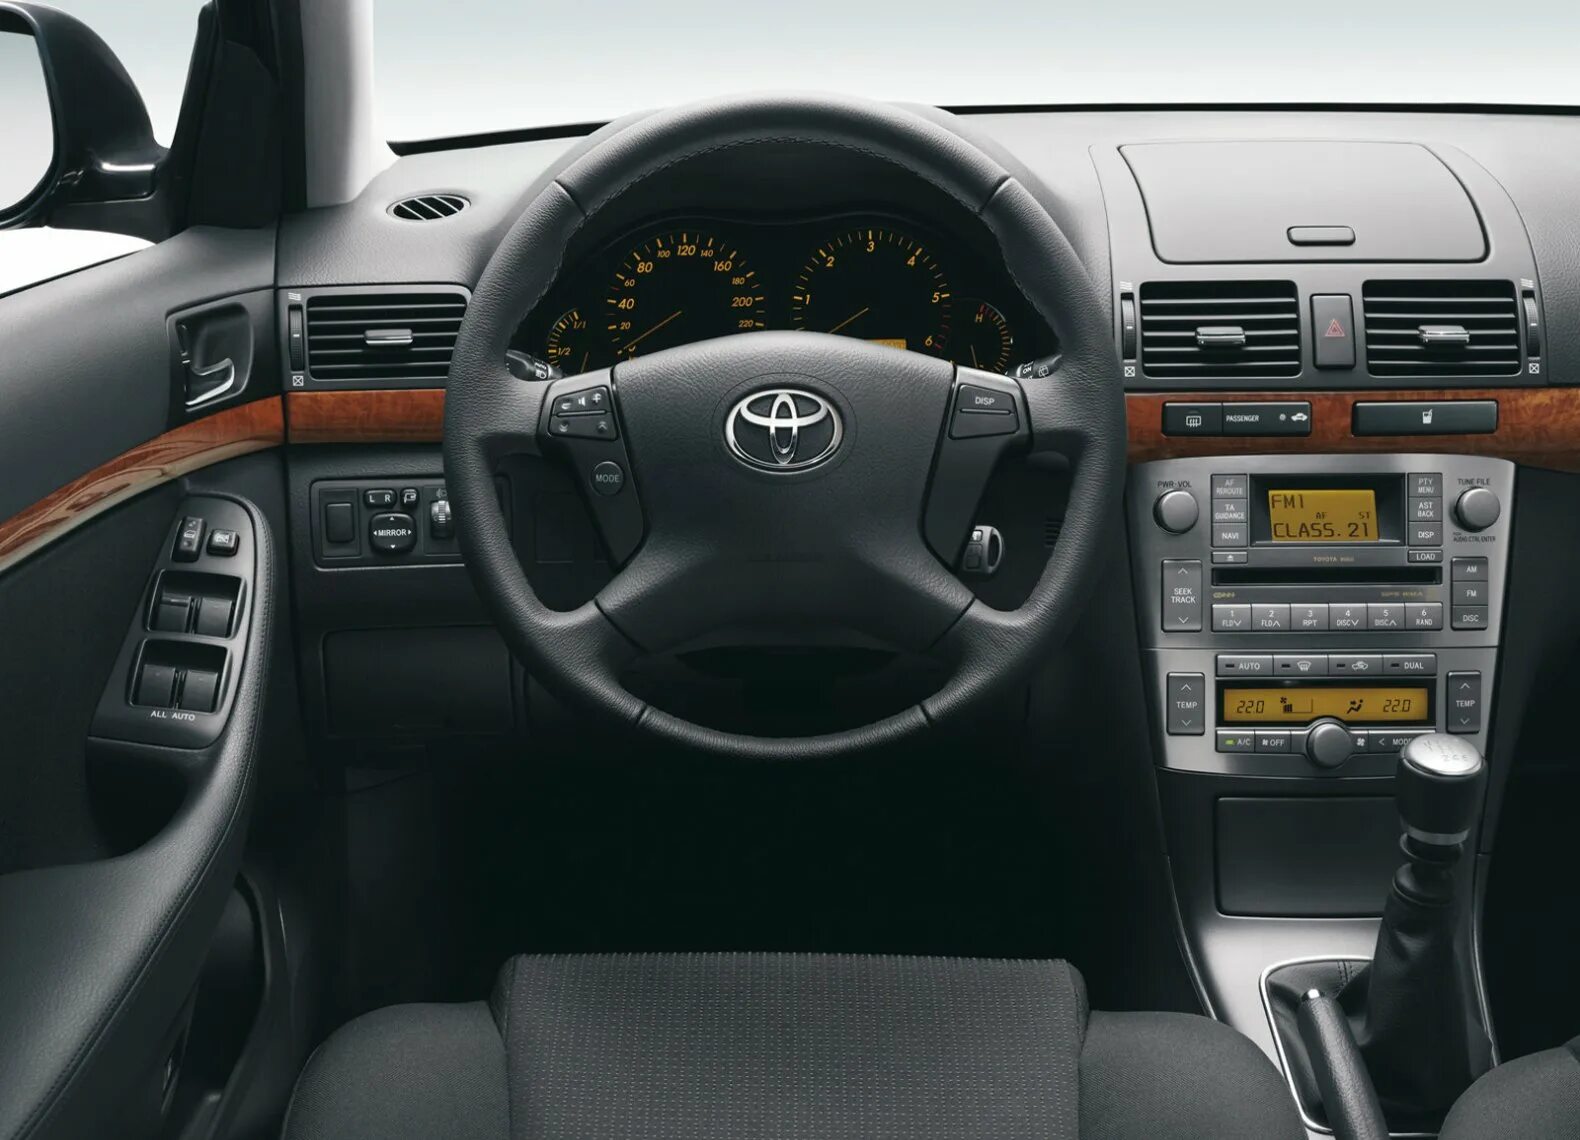 Toyota Avensis 2006 Interior. Тойота Авенсис 2007 1.8 салон. Тойота Авенсис 250 2003. Тойота Авенсис 2008 внутри.